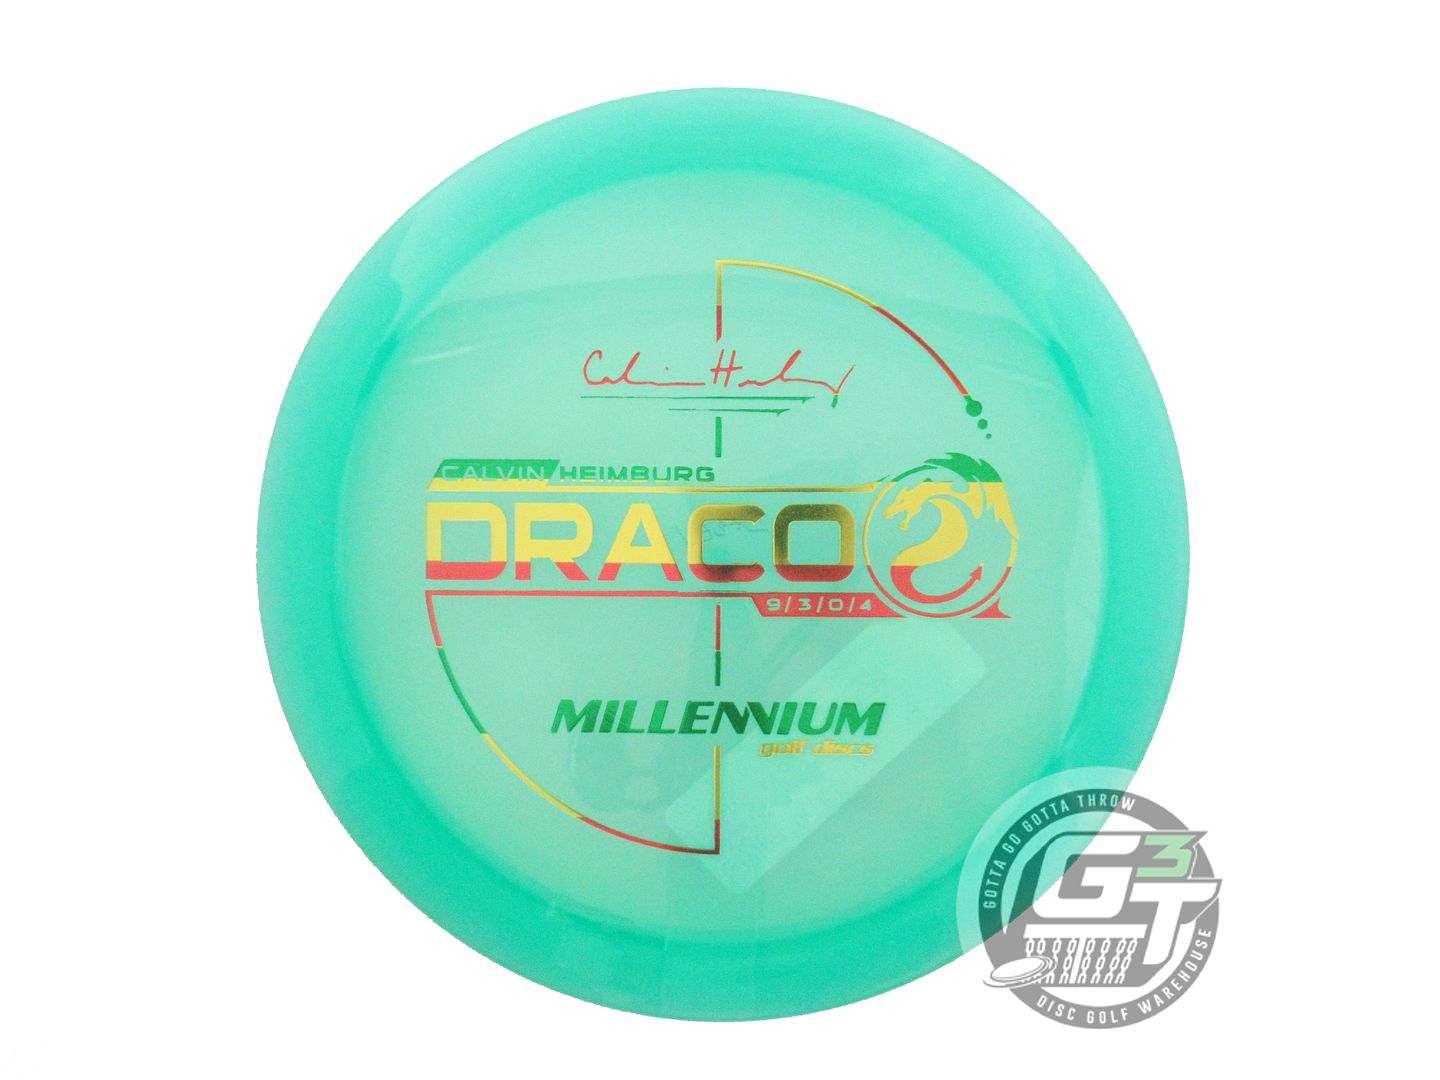 Millennium Calvin Heimburg Signature Flat Top Quantum Draco Distance Driver Golf Disc (Individually Listed)